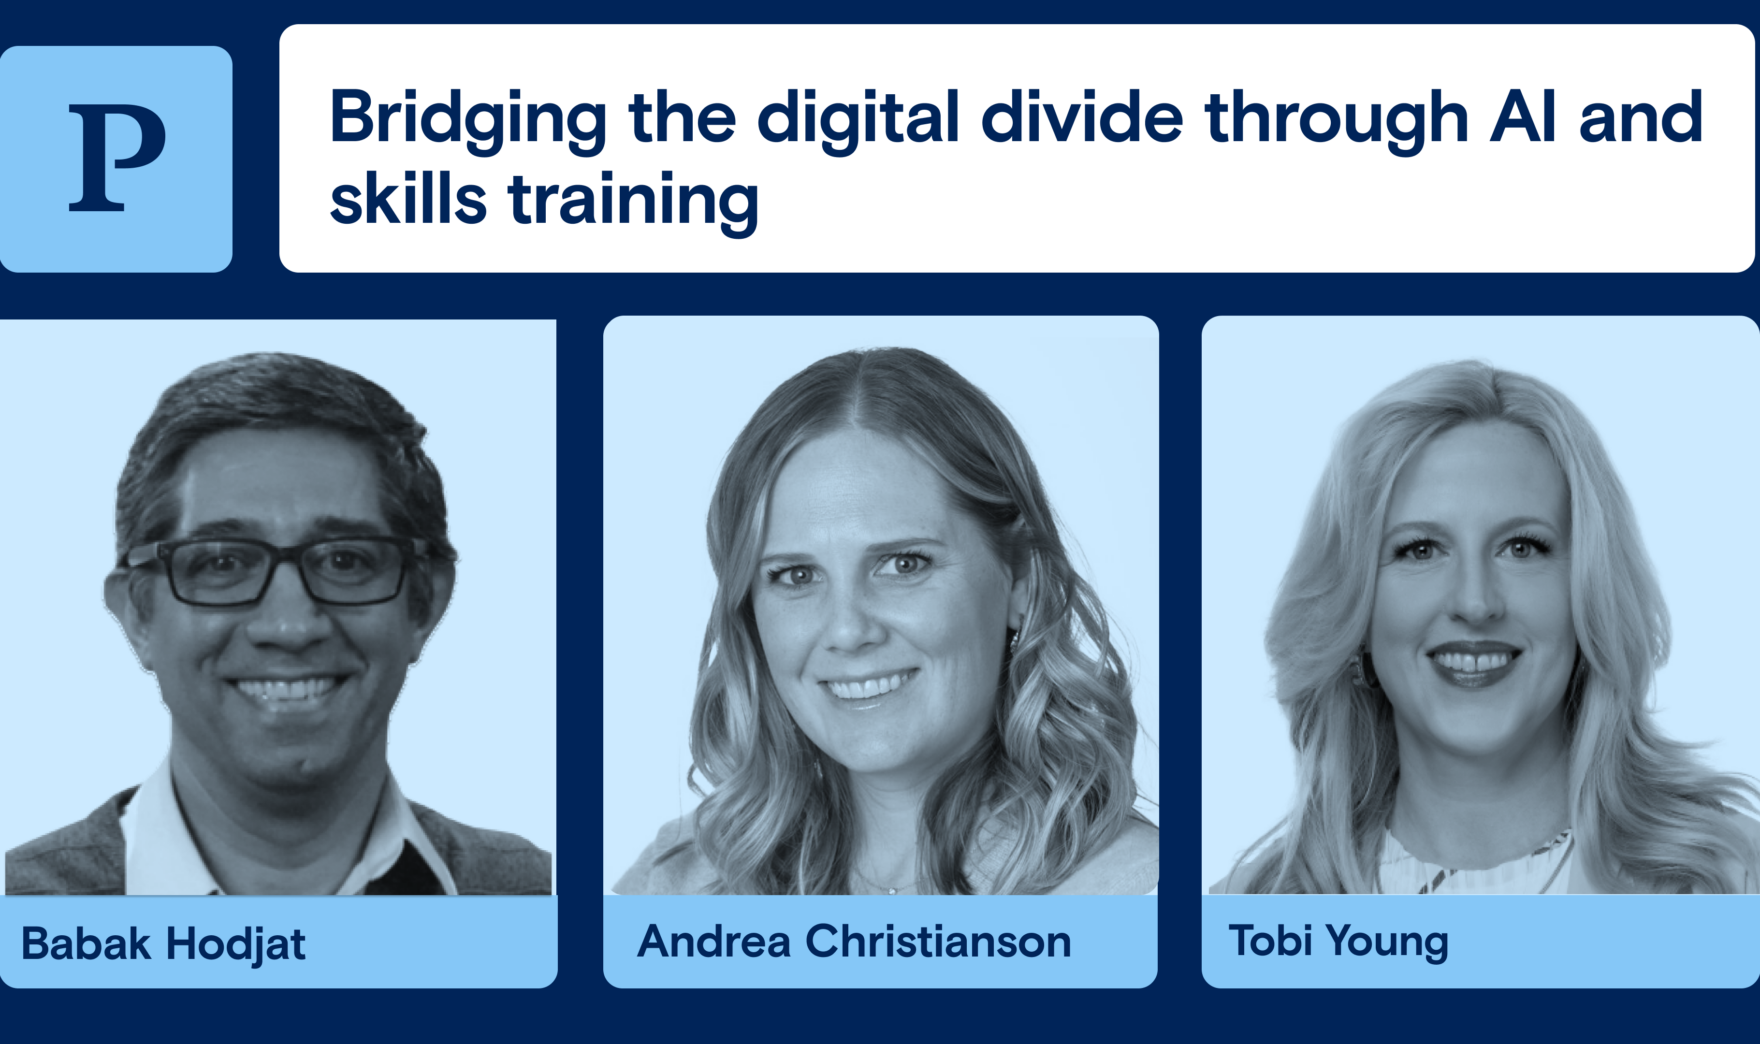 Bridging the digital divide through AI and skills training